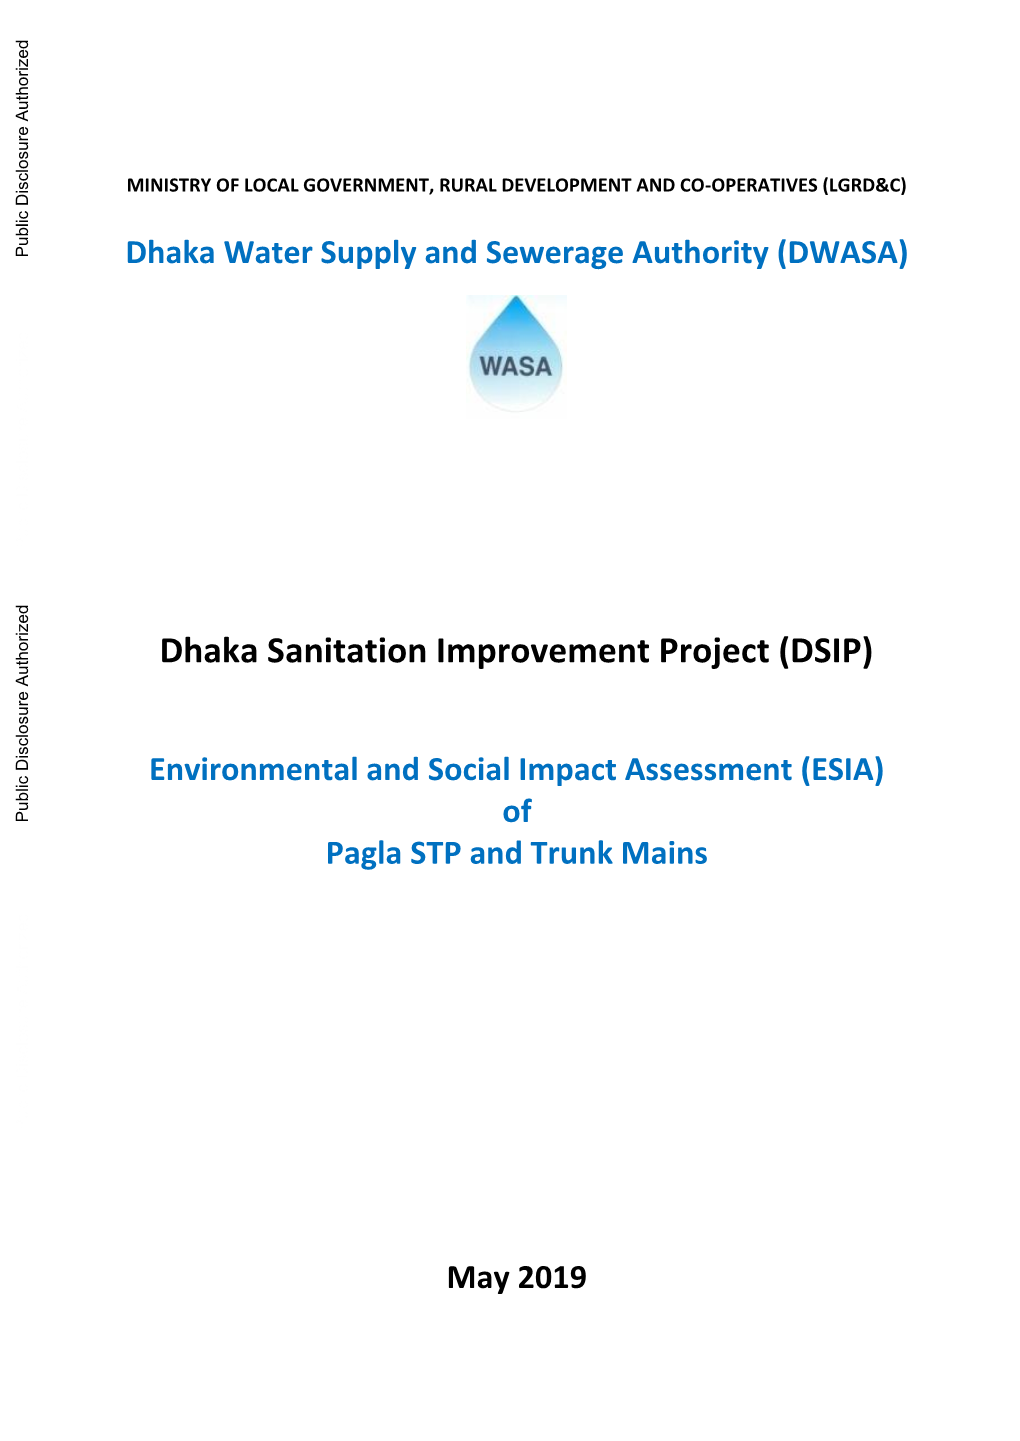 Dhaka Water Supply and Sewerage Authority (DWASA)